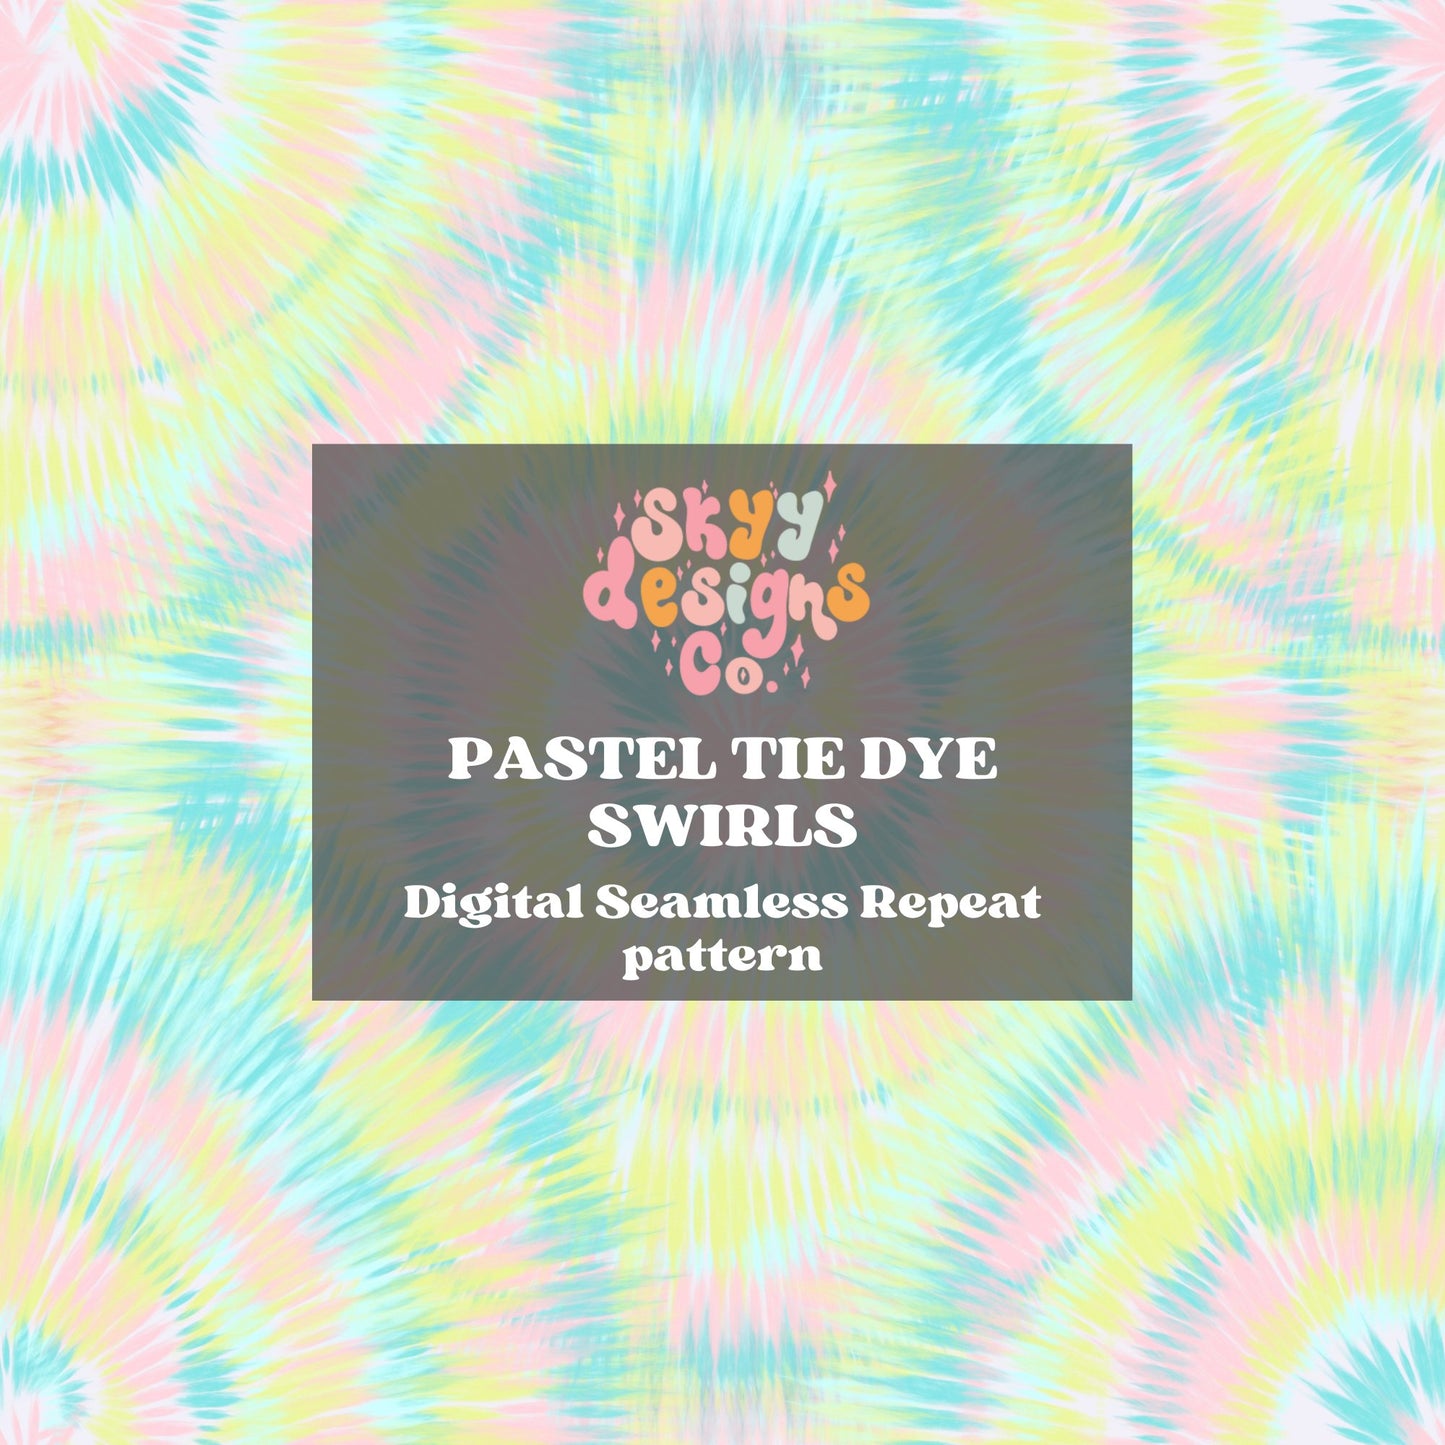 Bright pastel tie dye seamless pattern - SkyyDesignsCo | Seamless Pattern Designs